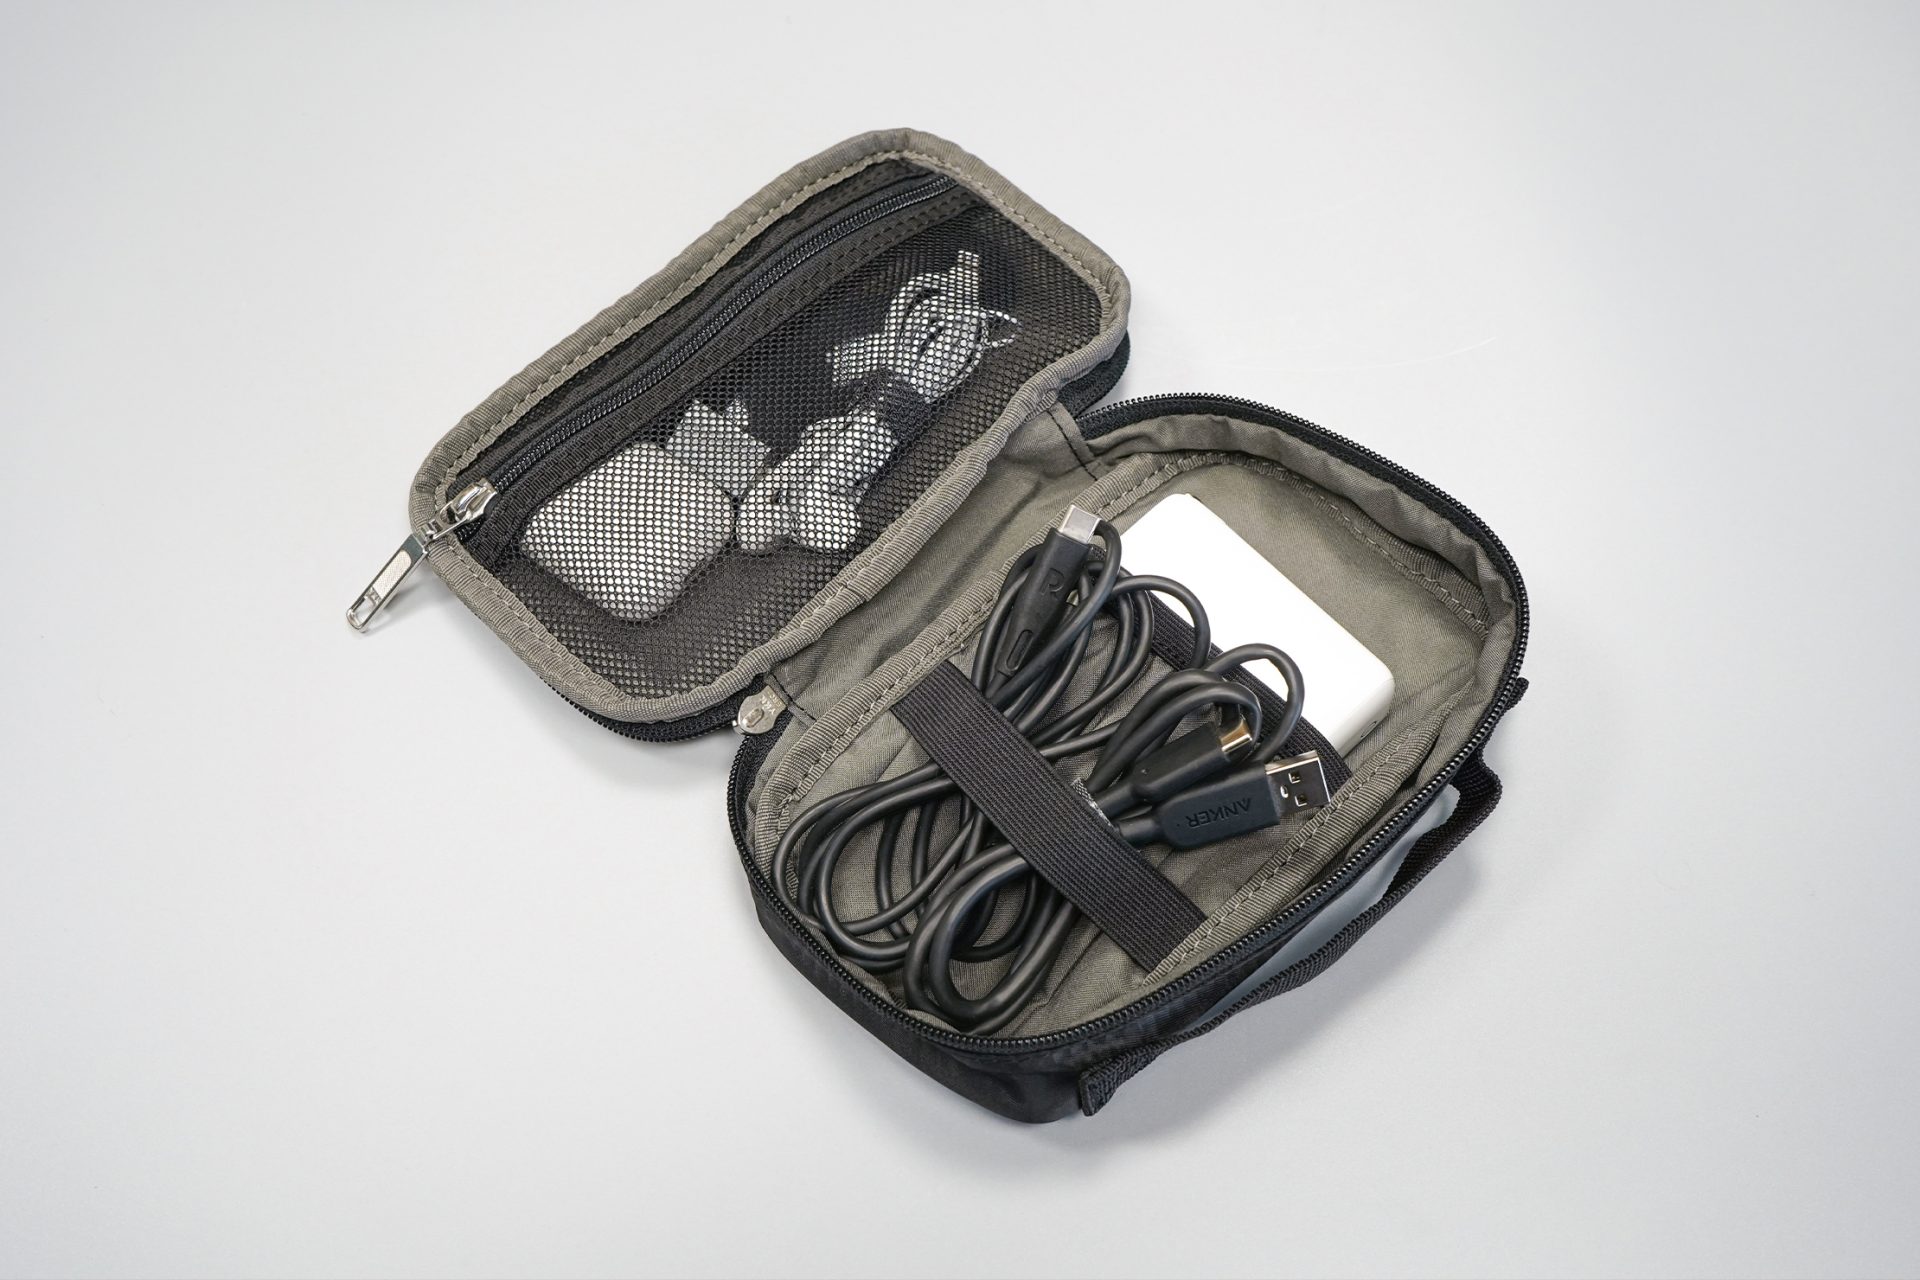 Nomad Lane Bento Bag Sport Edition tech pouch